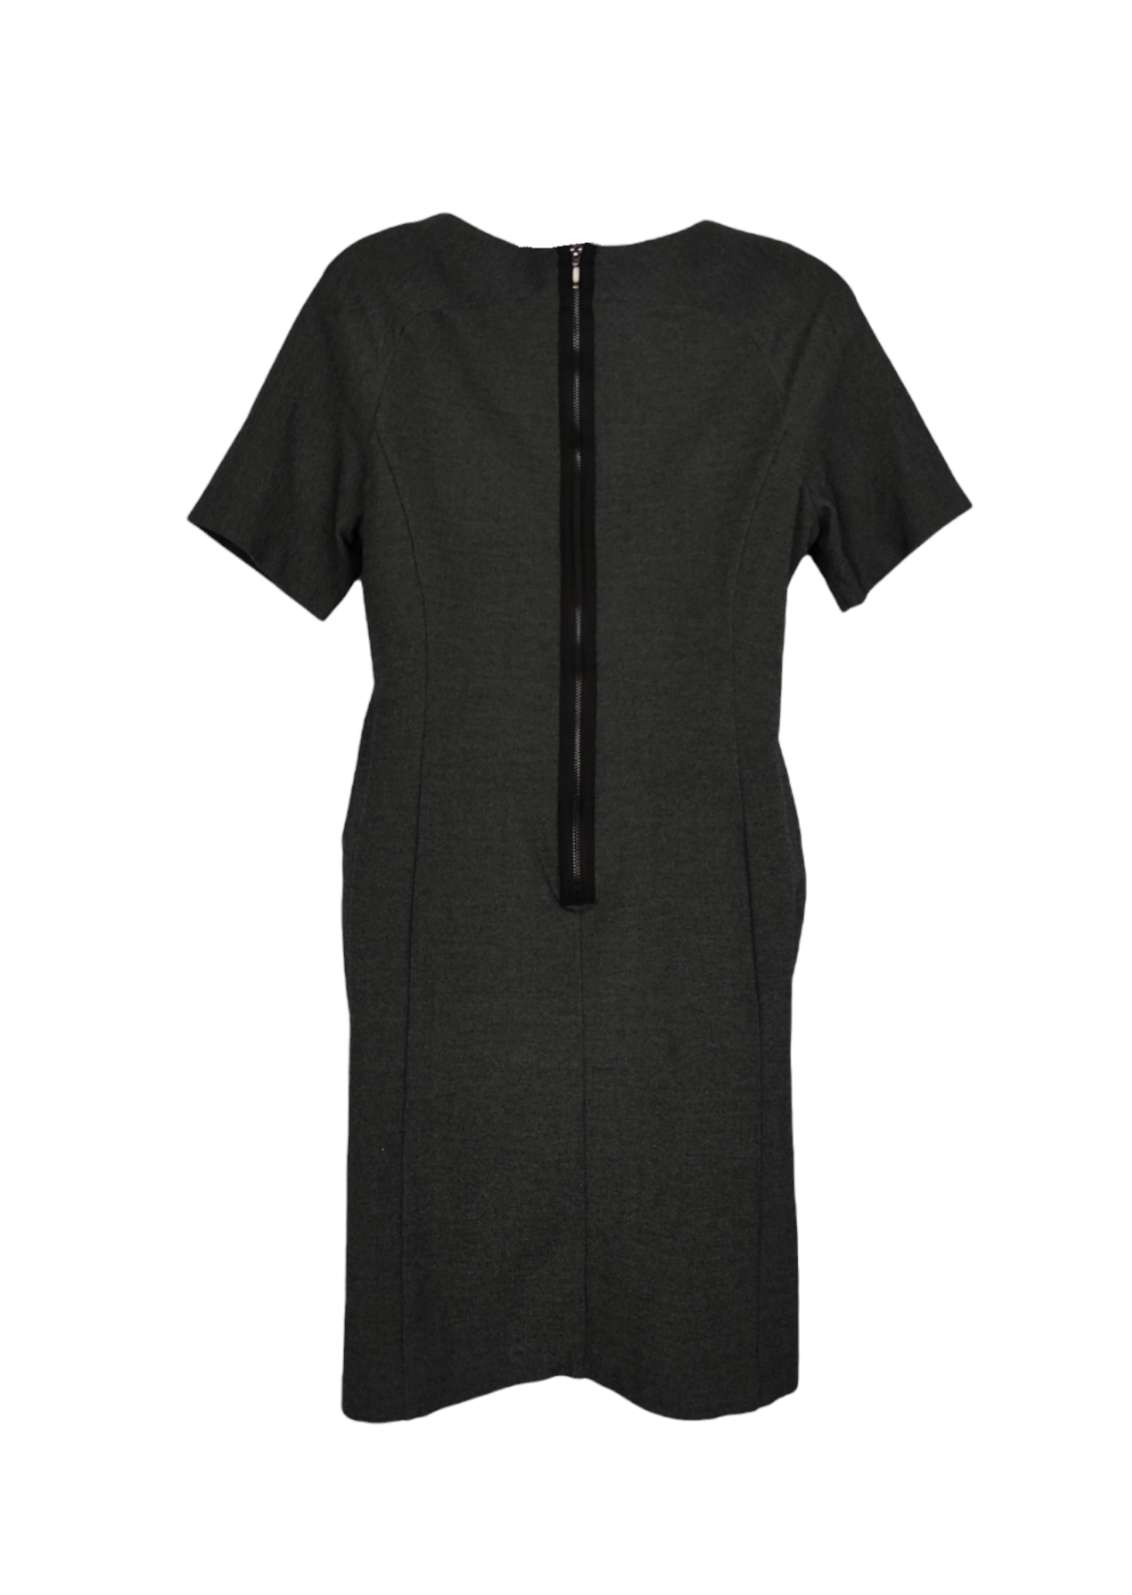 Midi Ελαστικό Φόρεμα PHASE EIGHT σε Ανθρακί Χρώμα (Large)